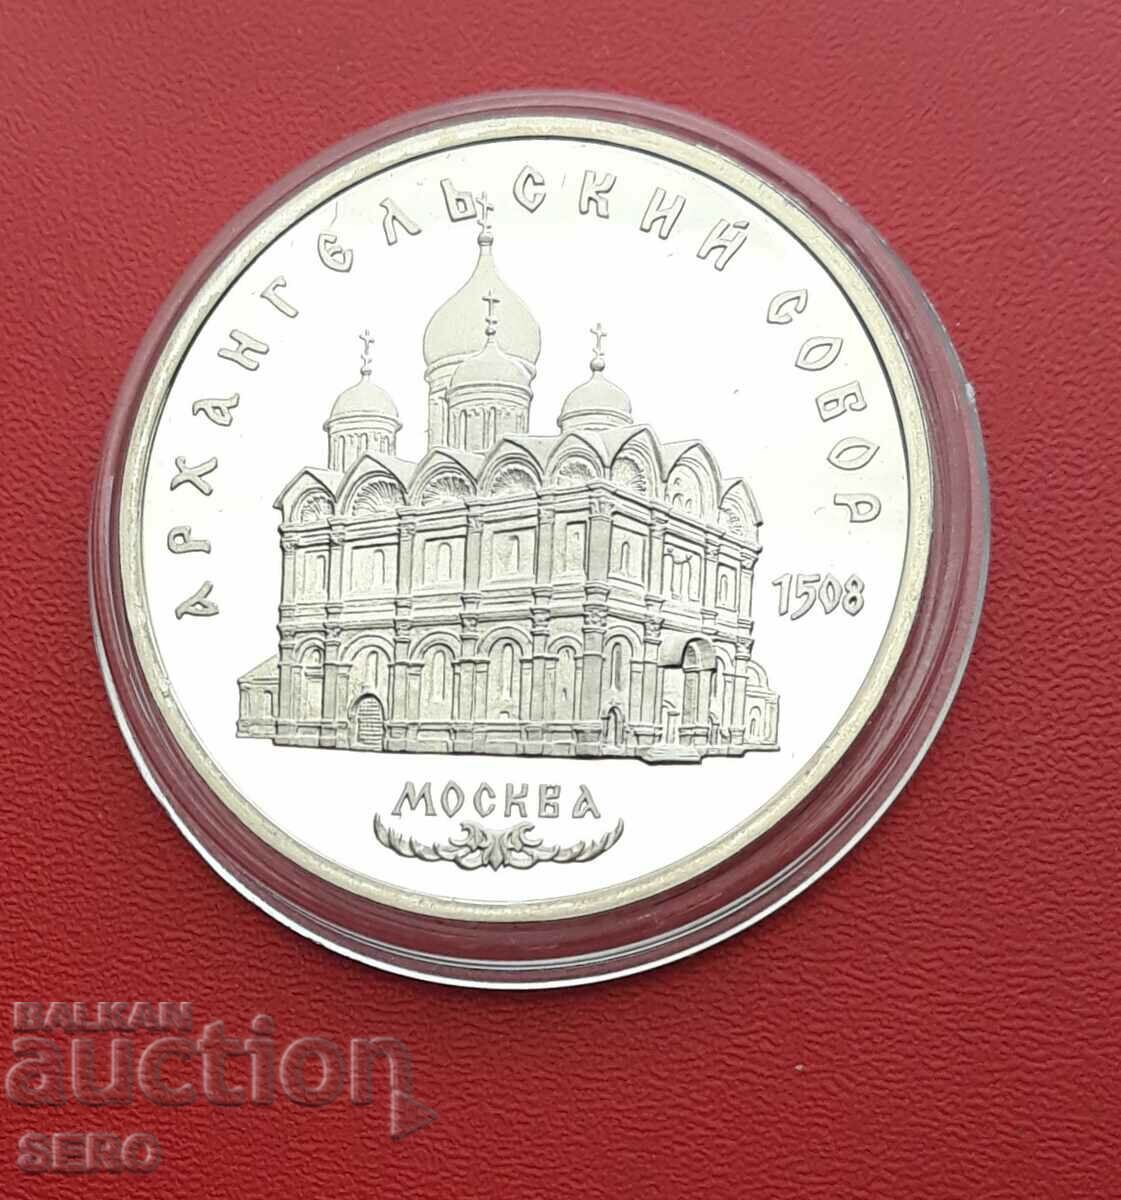 Rusia-URSS-5 ruble 1991-mat-lucios-ext